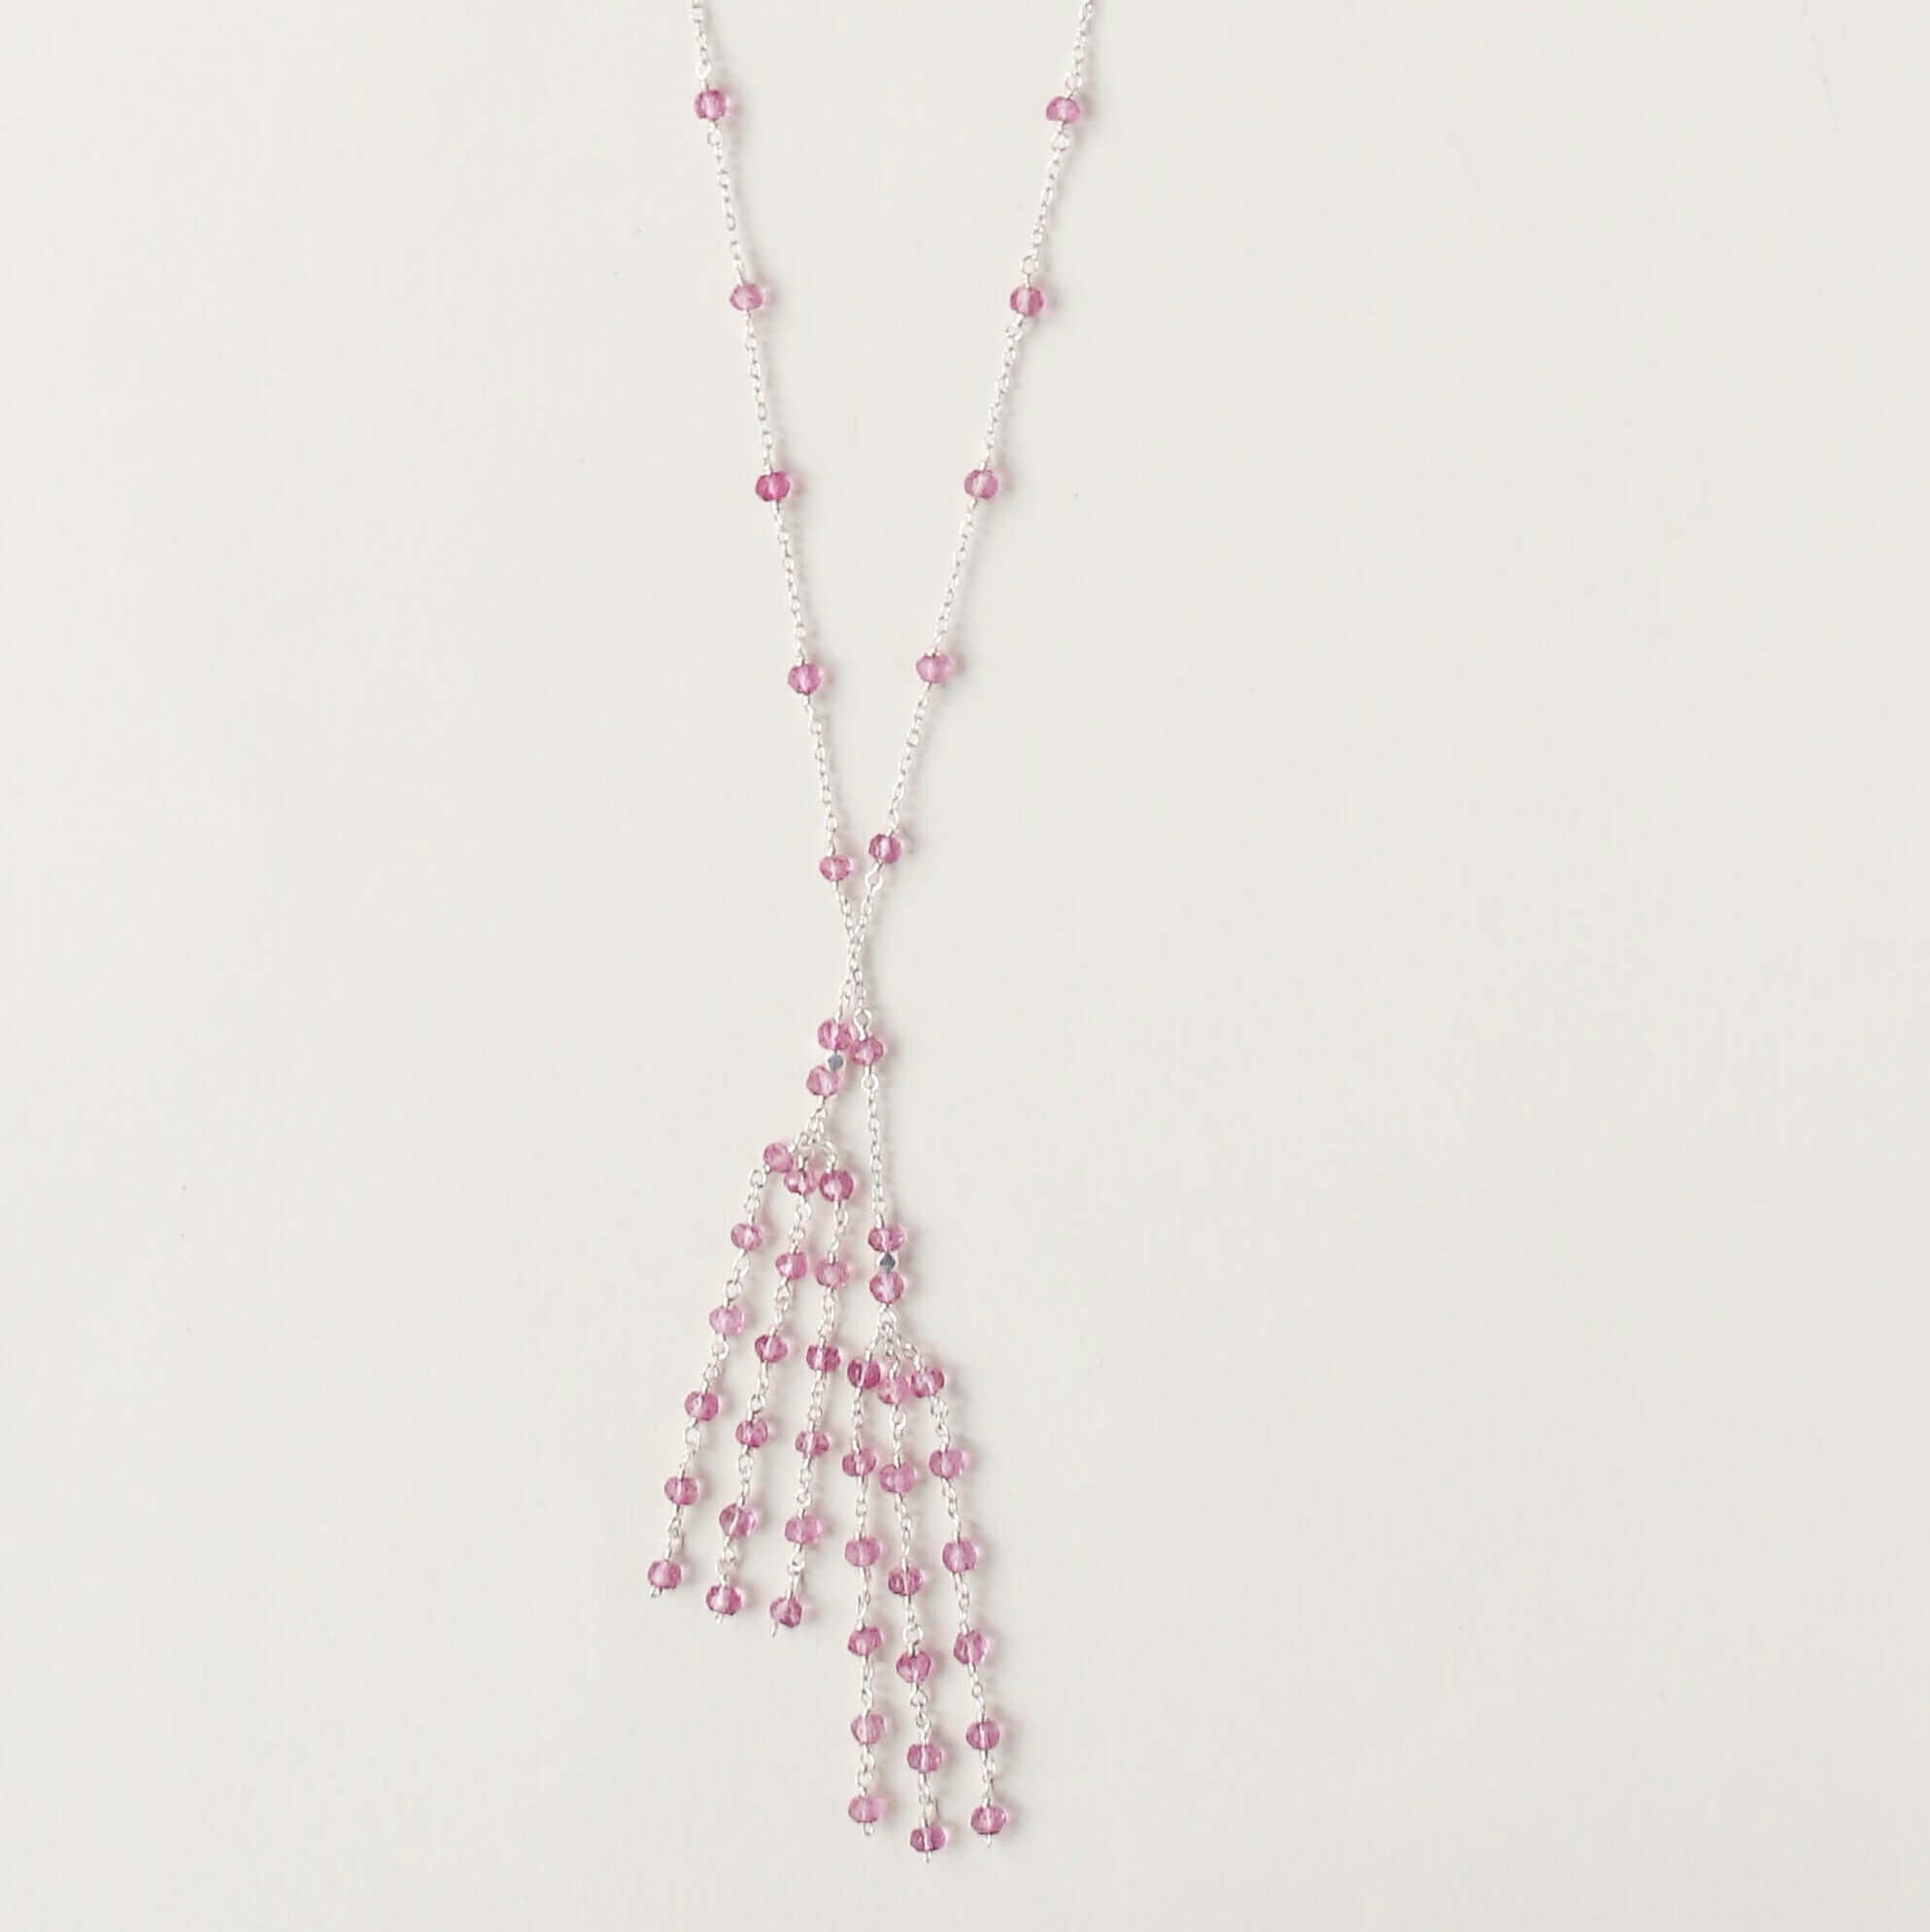 Rhodium plated Handmade Lariat Necklace Featuring Pink Tourmaline Gemstones